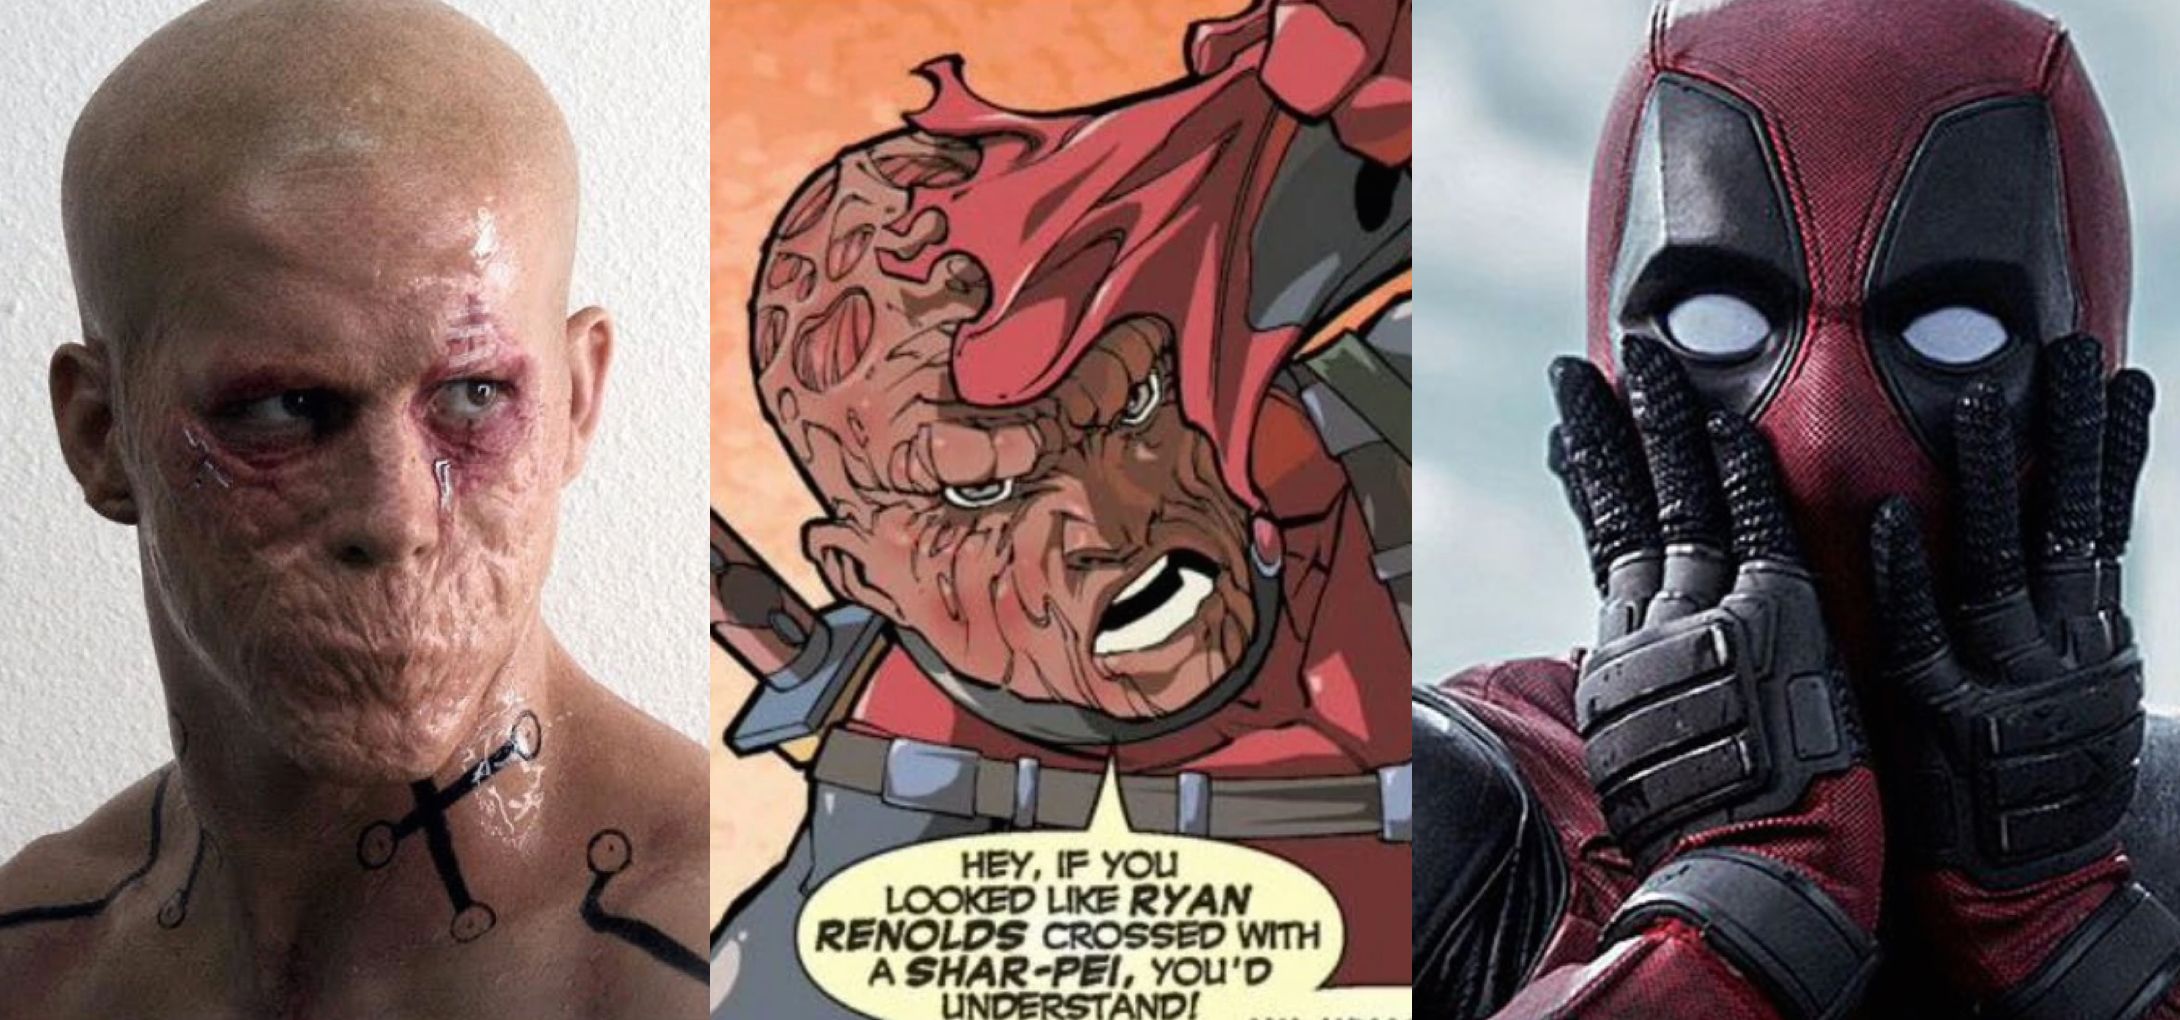 Wade Wilson Deadpool in Comics and Movies